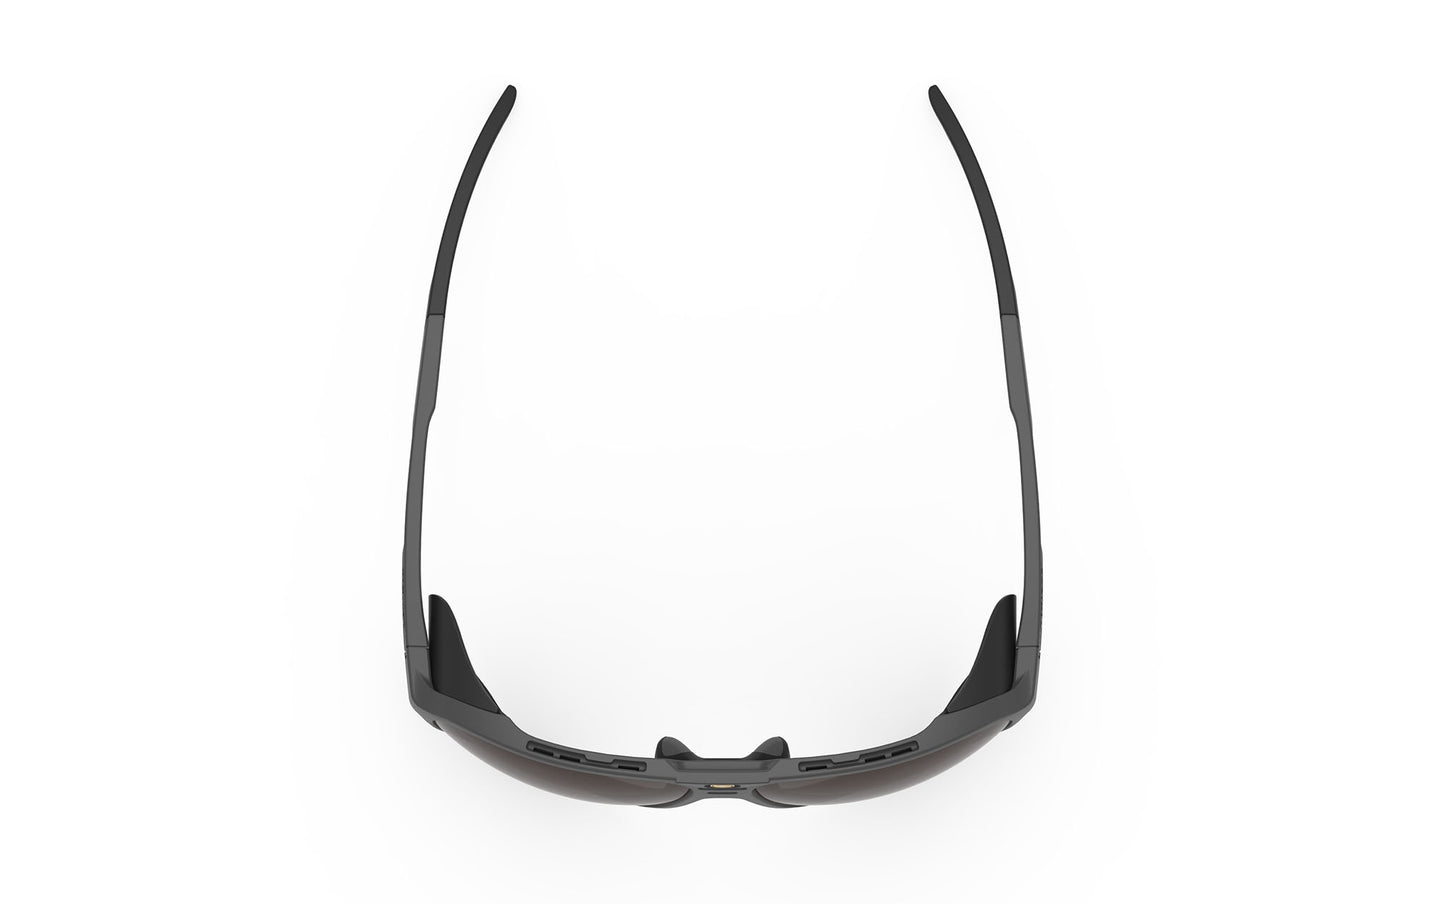 Rudy Project Stardash Charcoal (Matte) - Rp Optics Hi-Altitude Sunglasses